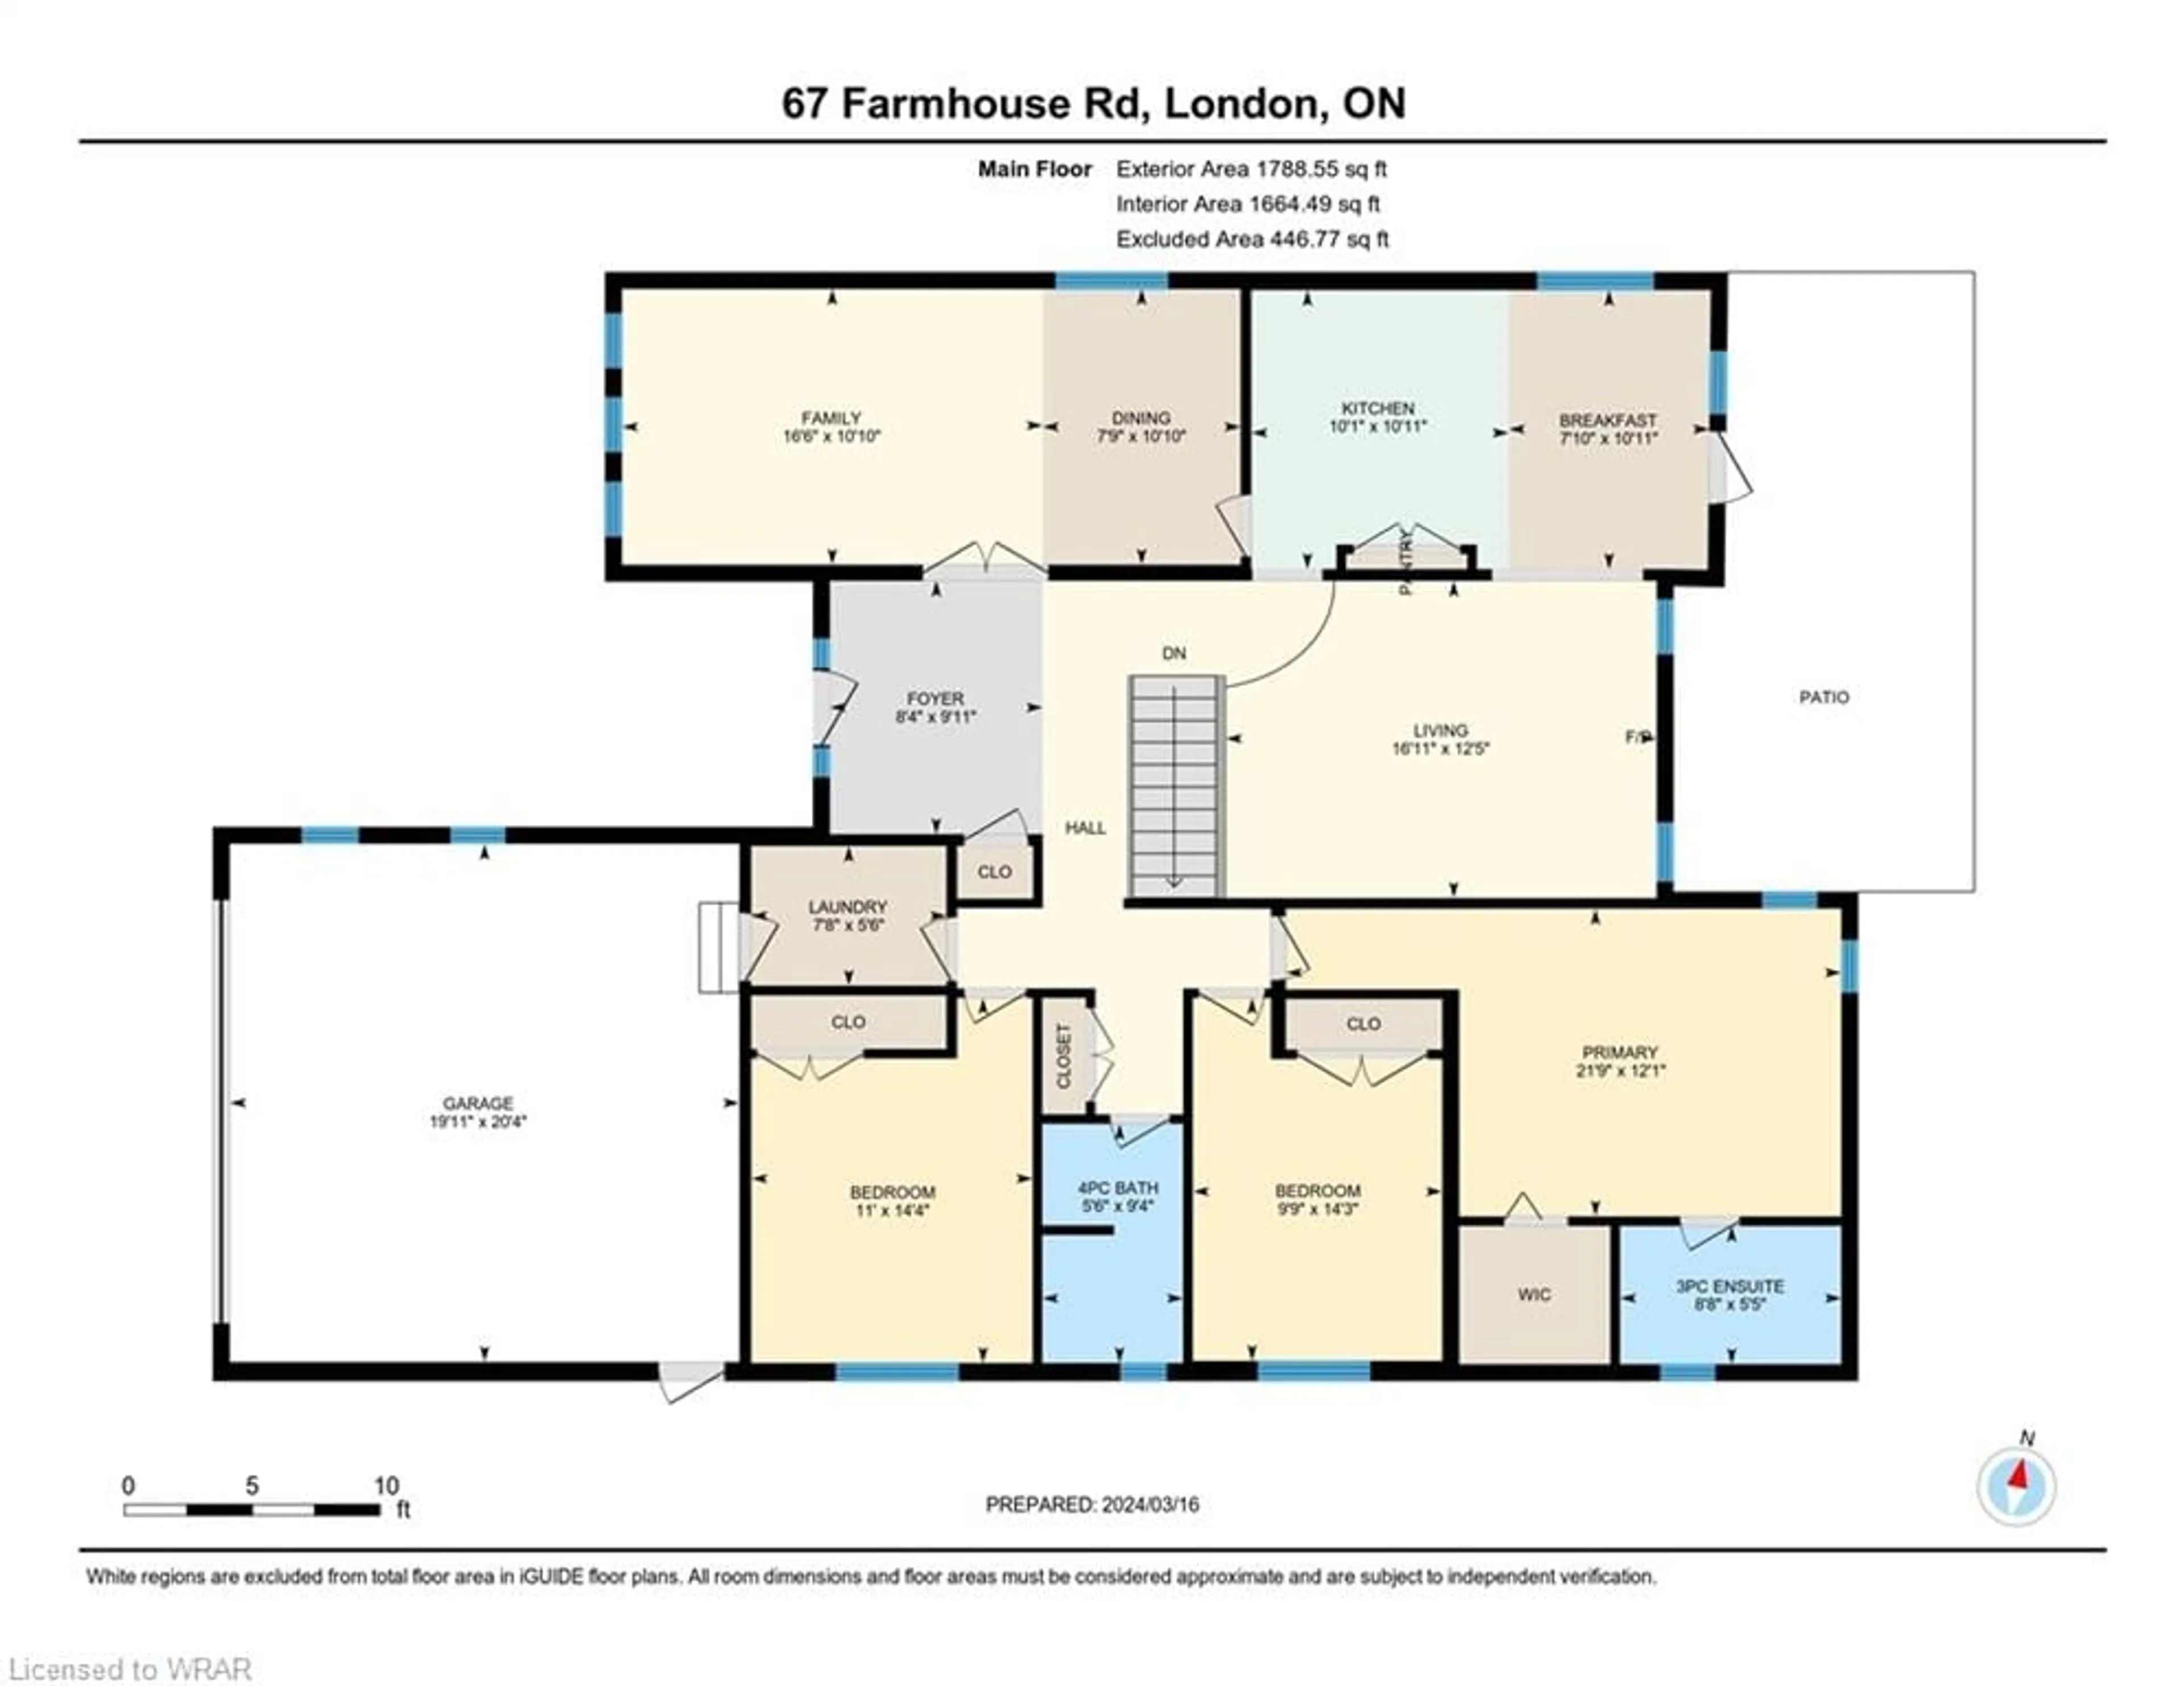 Floor plan for 67 Farmhouse Rd, London Ontario N5Y 5M4